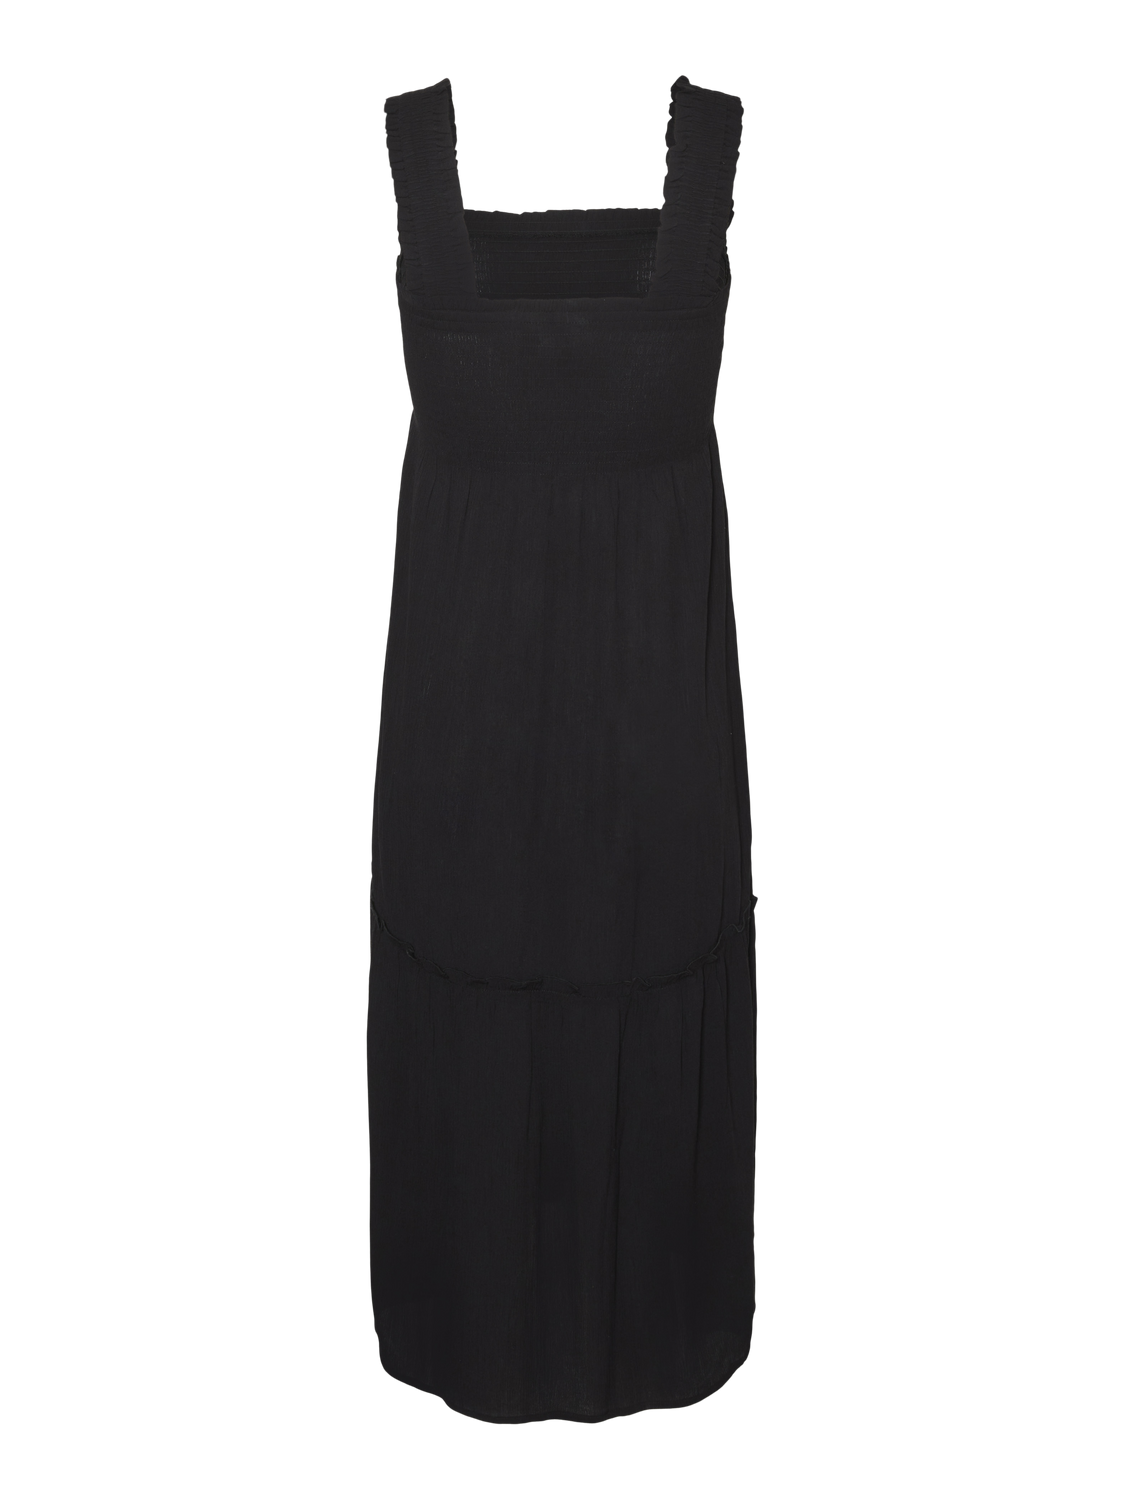 MAMA.LICIOUS Krój regularny Kwadratowy dekolt Długa sukienka -Black - 20020567